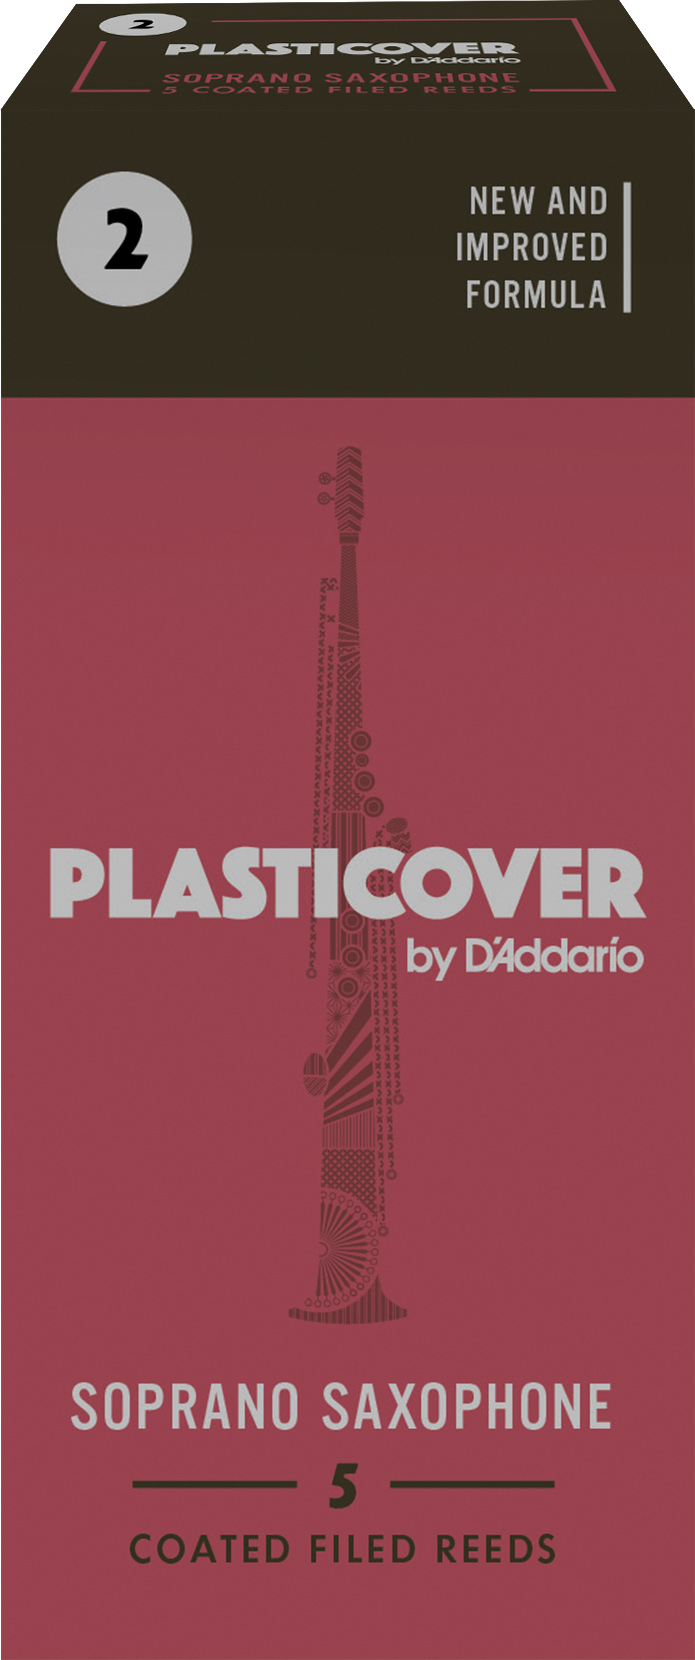 Plasticcover Sopransaxophonblätter 2,0 5er Packung